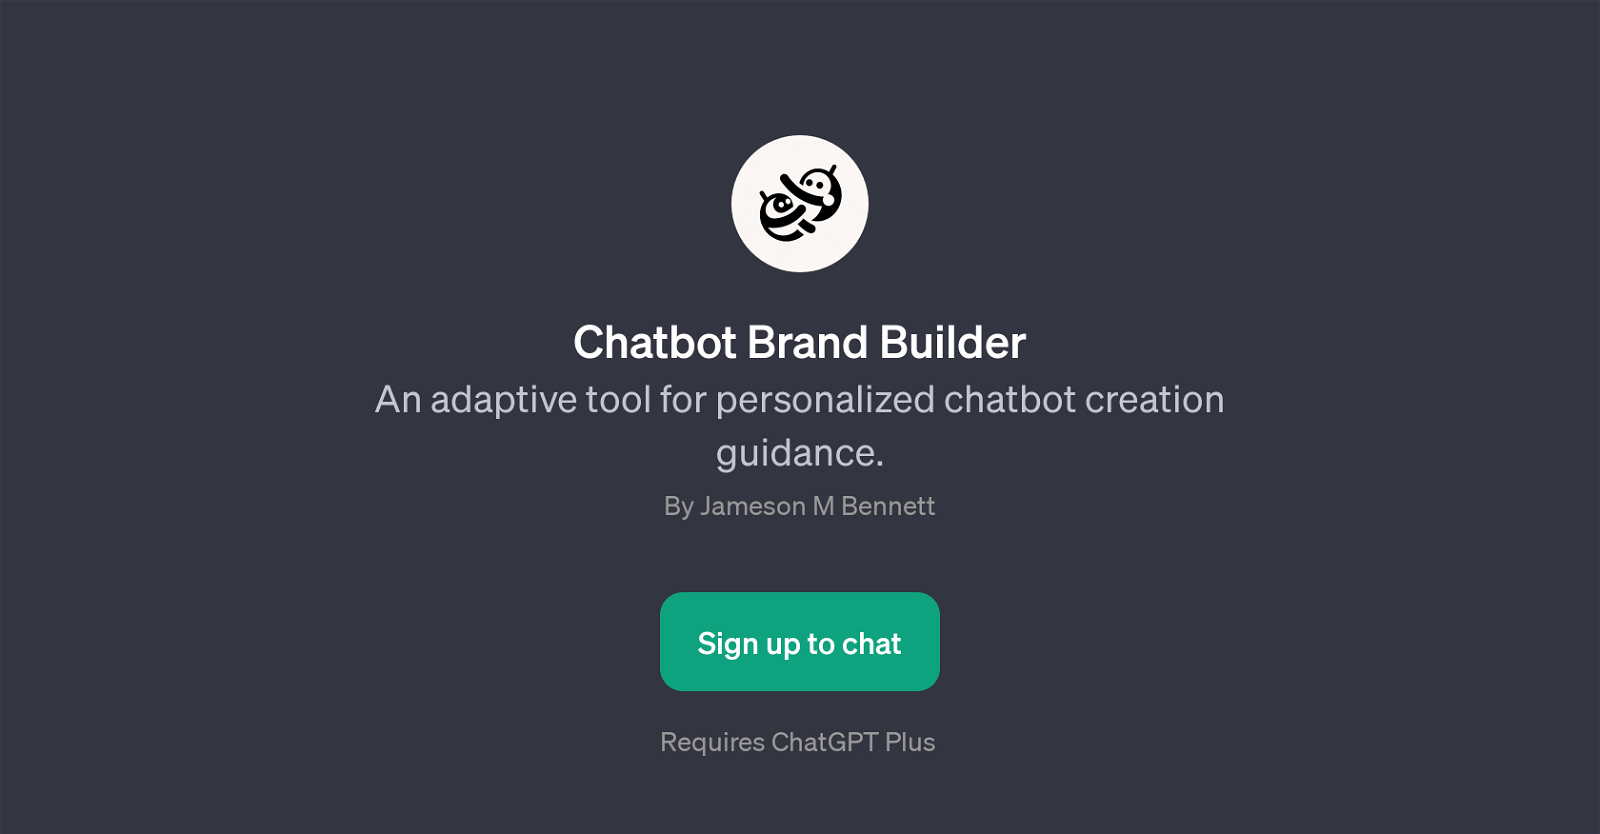 Chatbot Brand Builder website